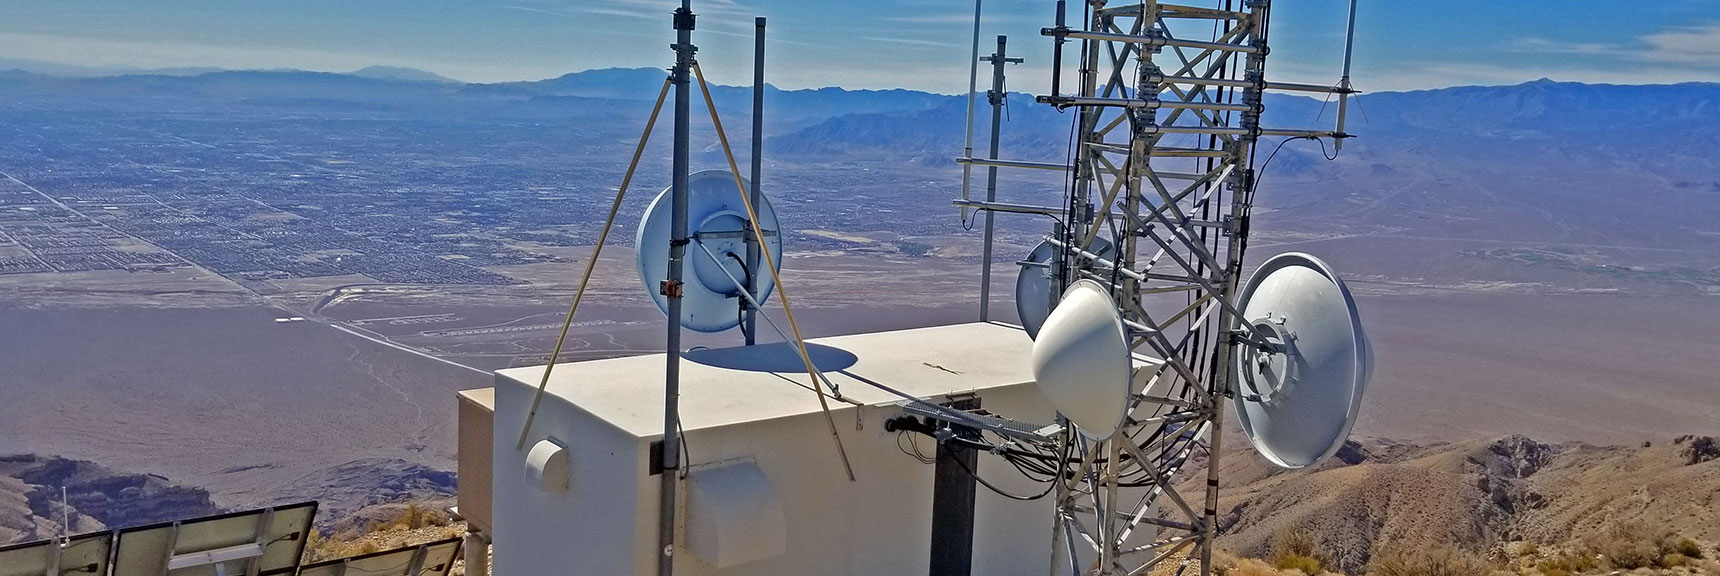 Communication Equipment on Gass Peak's Summit. | Gass Peak Grand Crossing | Desert National Wildlife Refuge to Centennial Hills Las Vegas via Gass Peak Summit by Foot